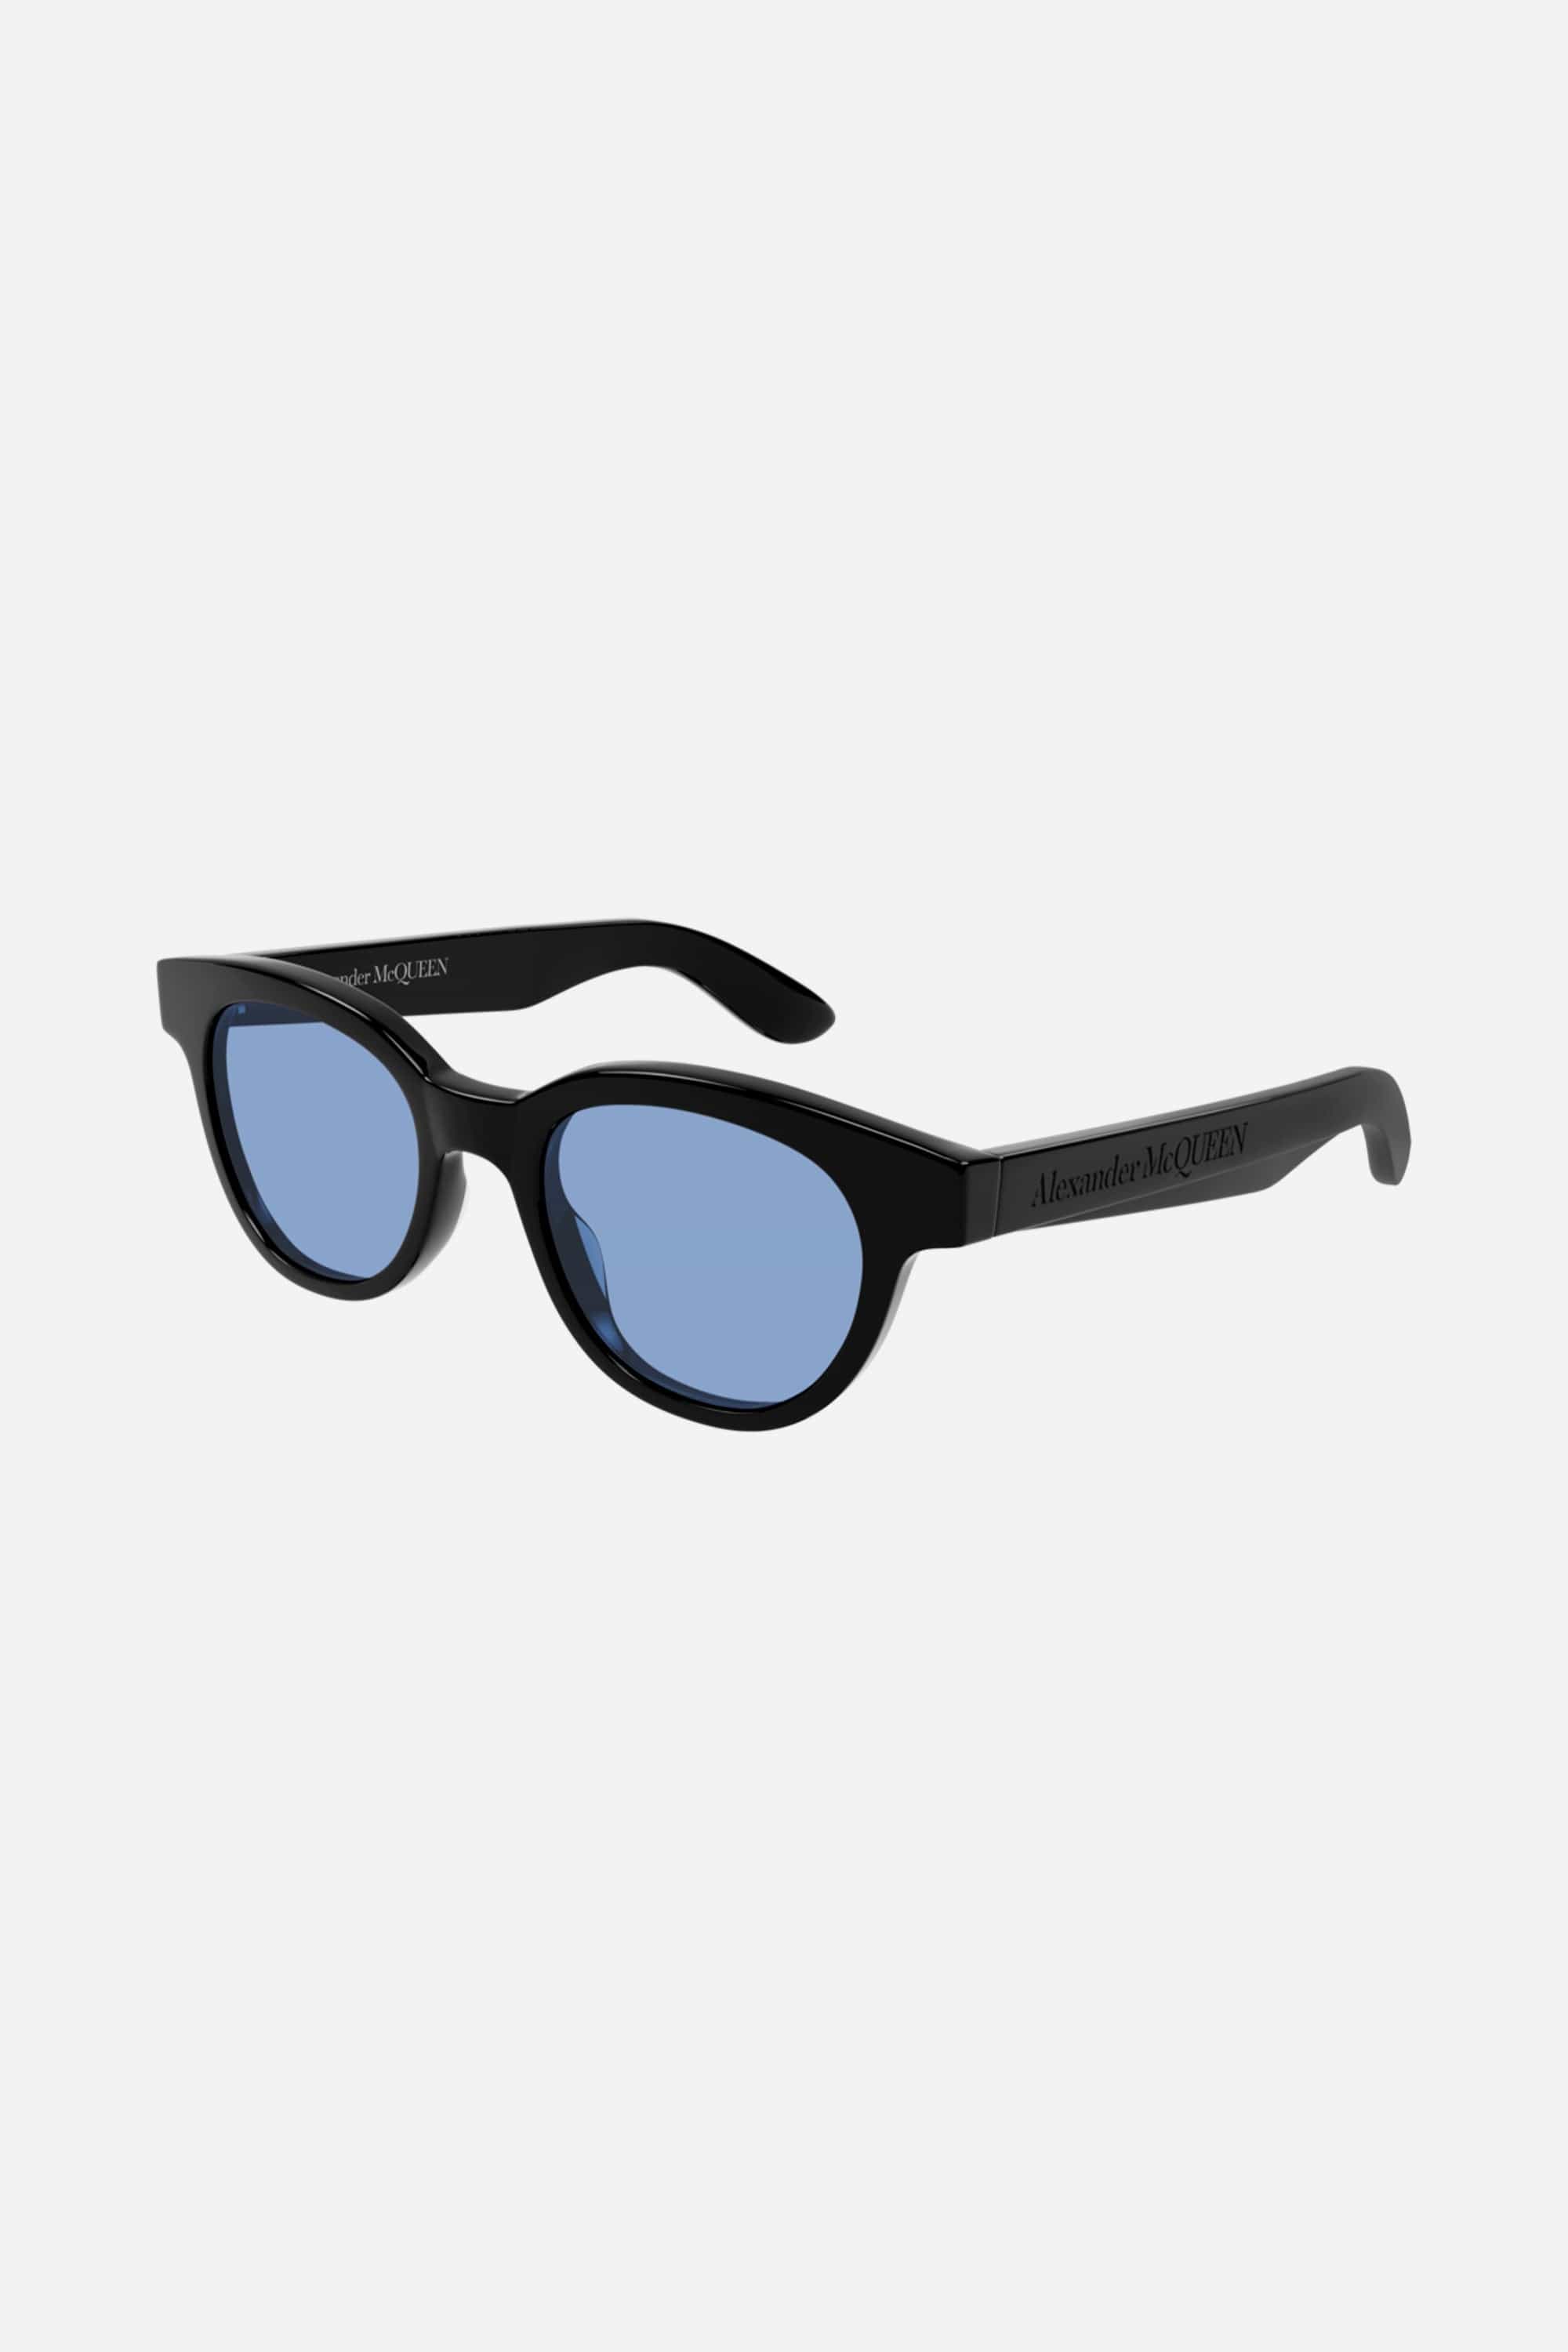 Alexander McQueen black and blue unisex sunglasses - Eyewear Club